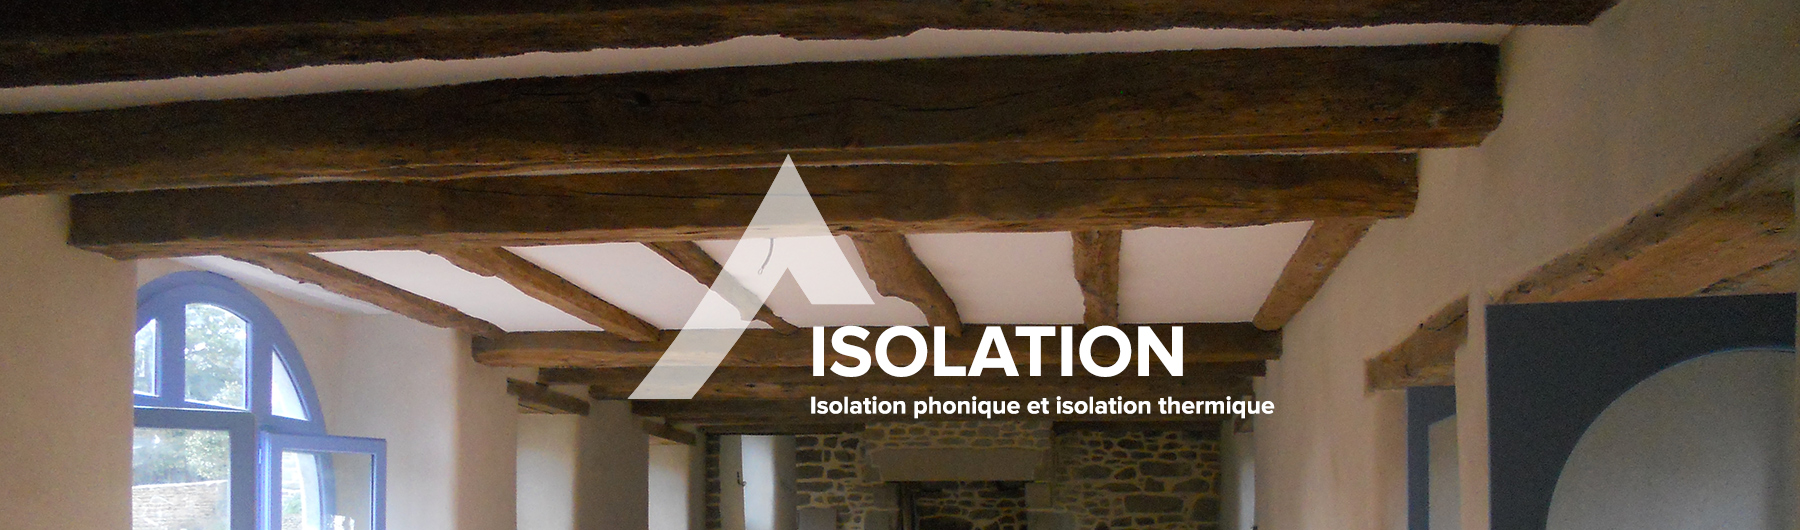 isolation-phonique-thermique